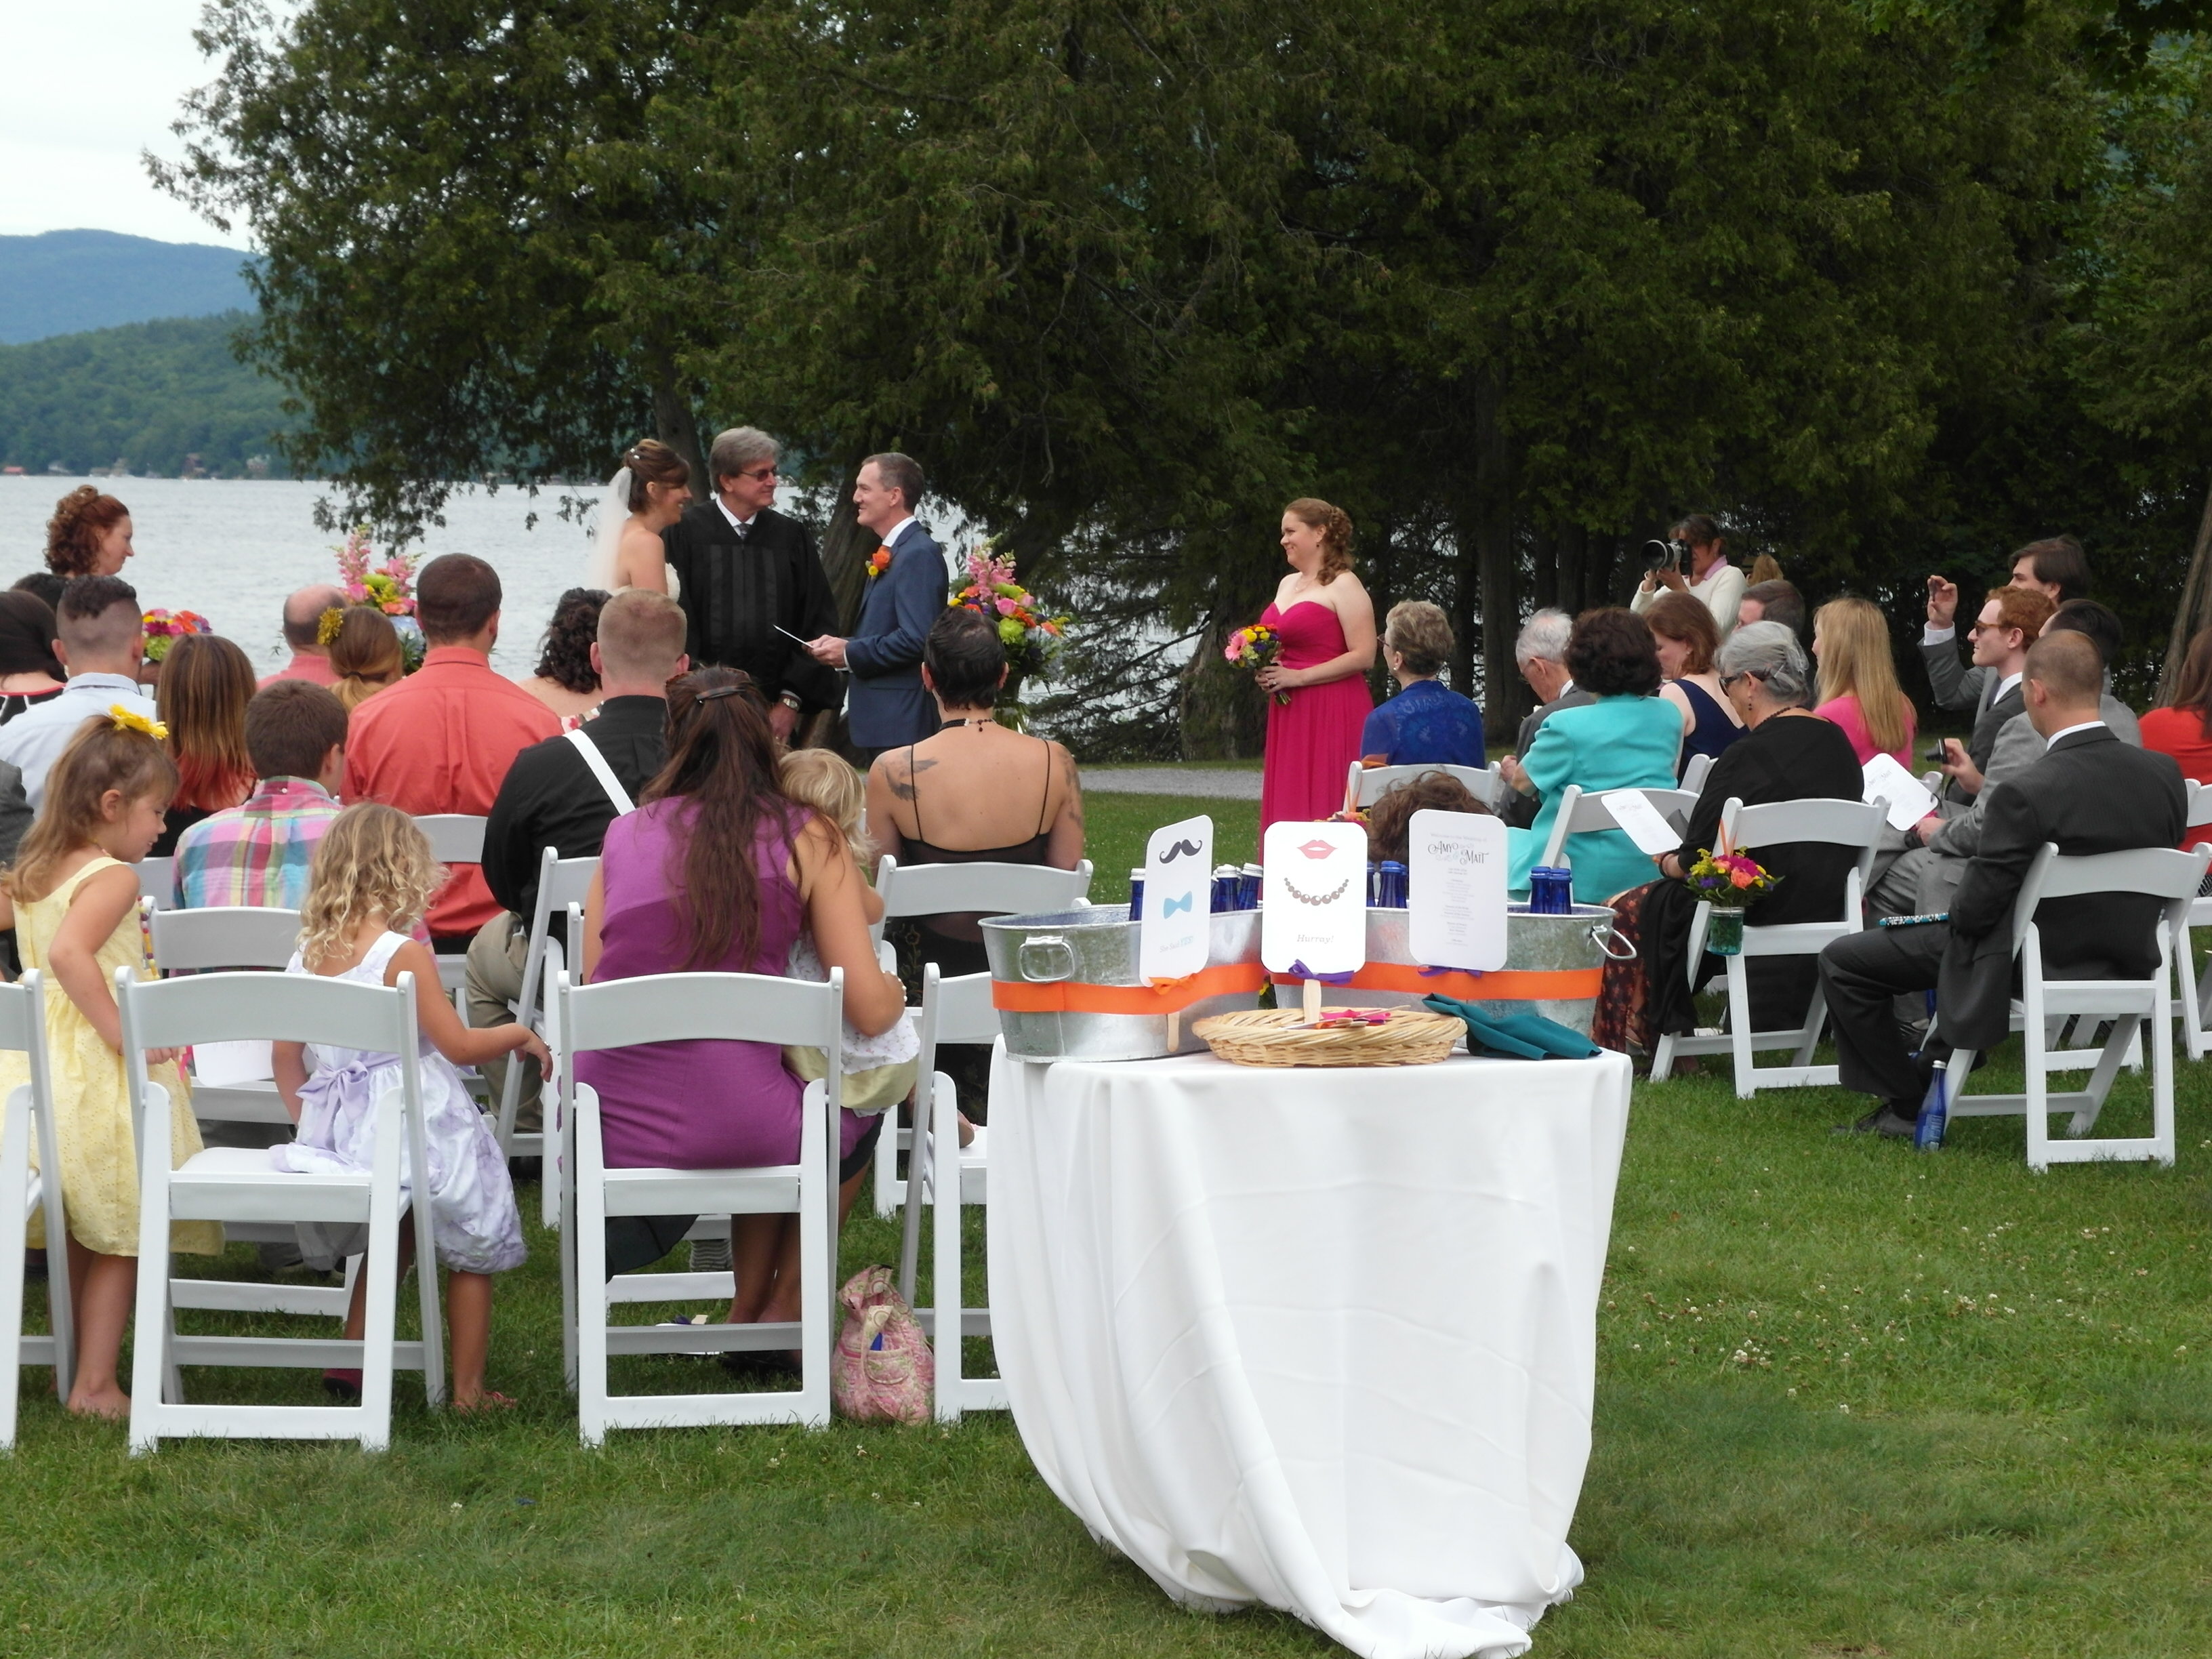 Summer outdoor wedding overlooking Lake George.